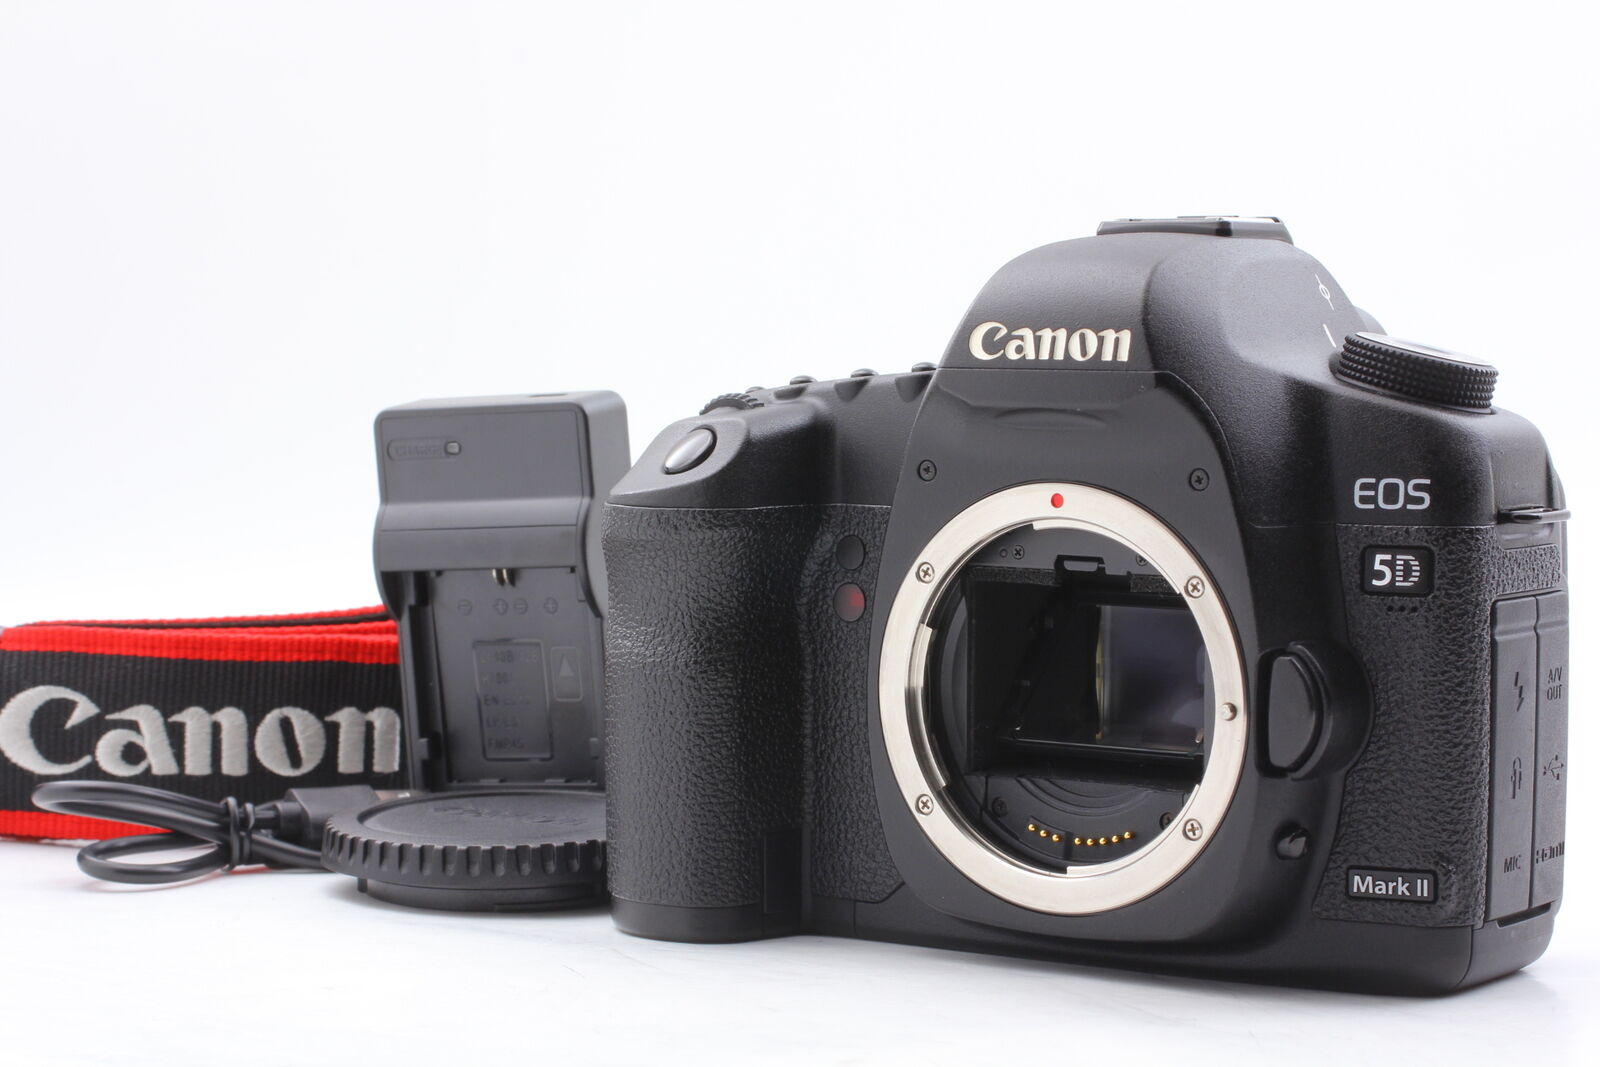 Shot28943 [MINT] Canon EOS 5D Mark II 21.1 MP Digital SLR Camera Body From JAPAN